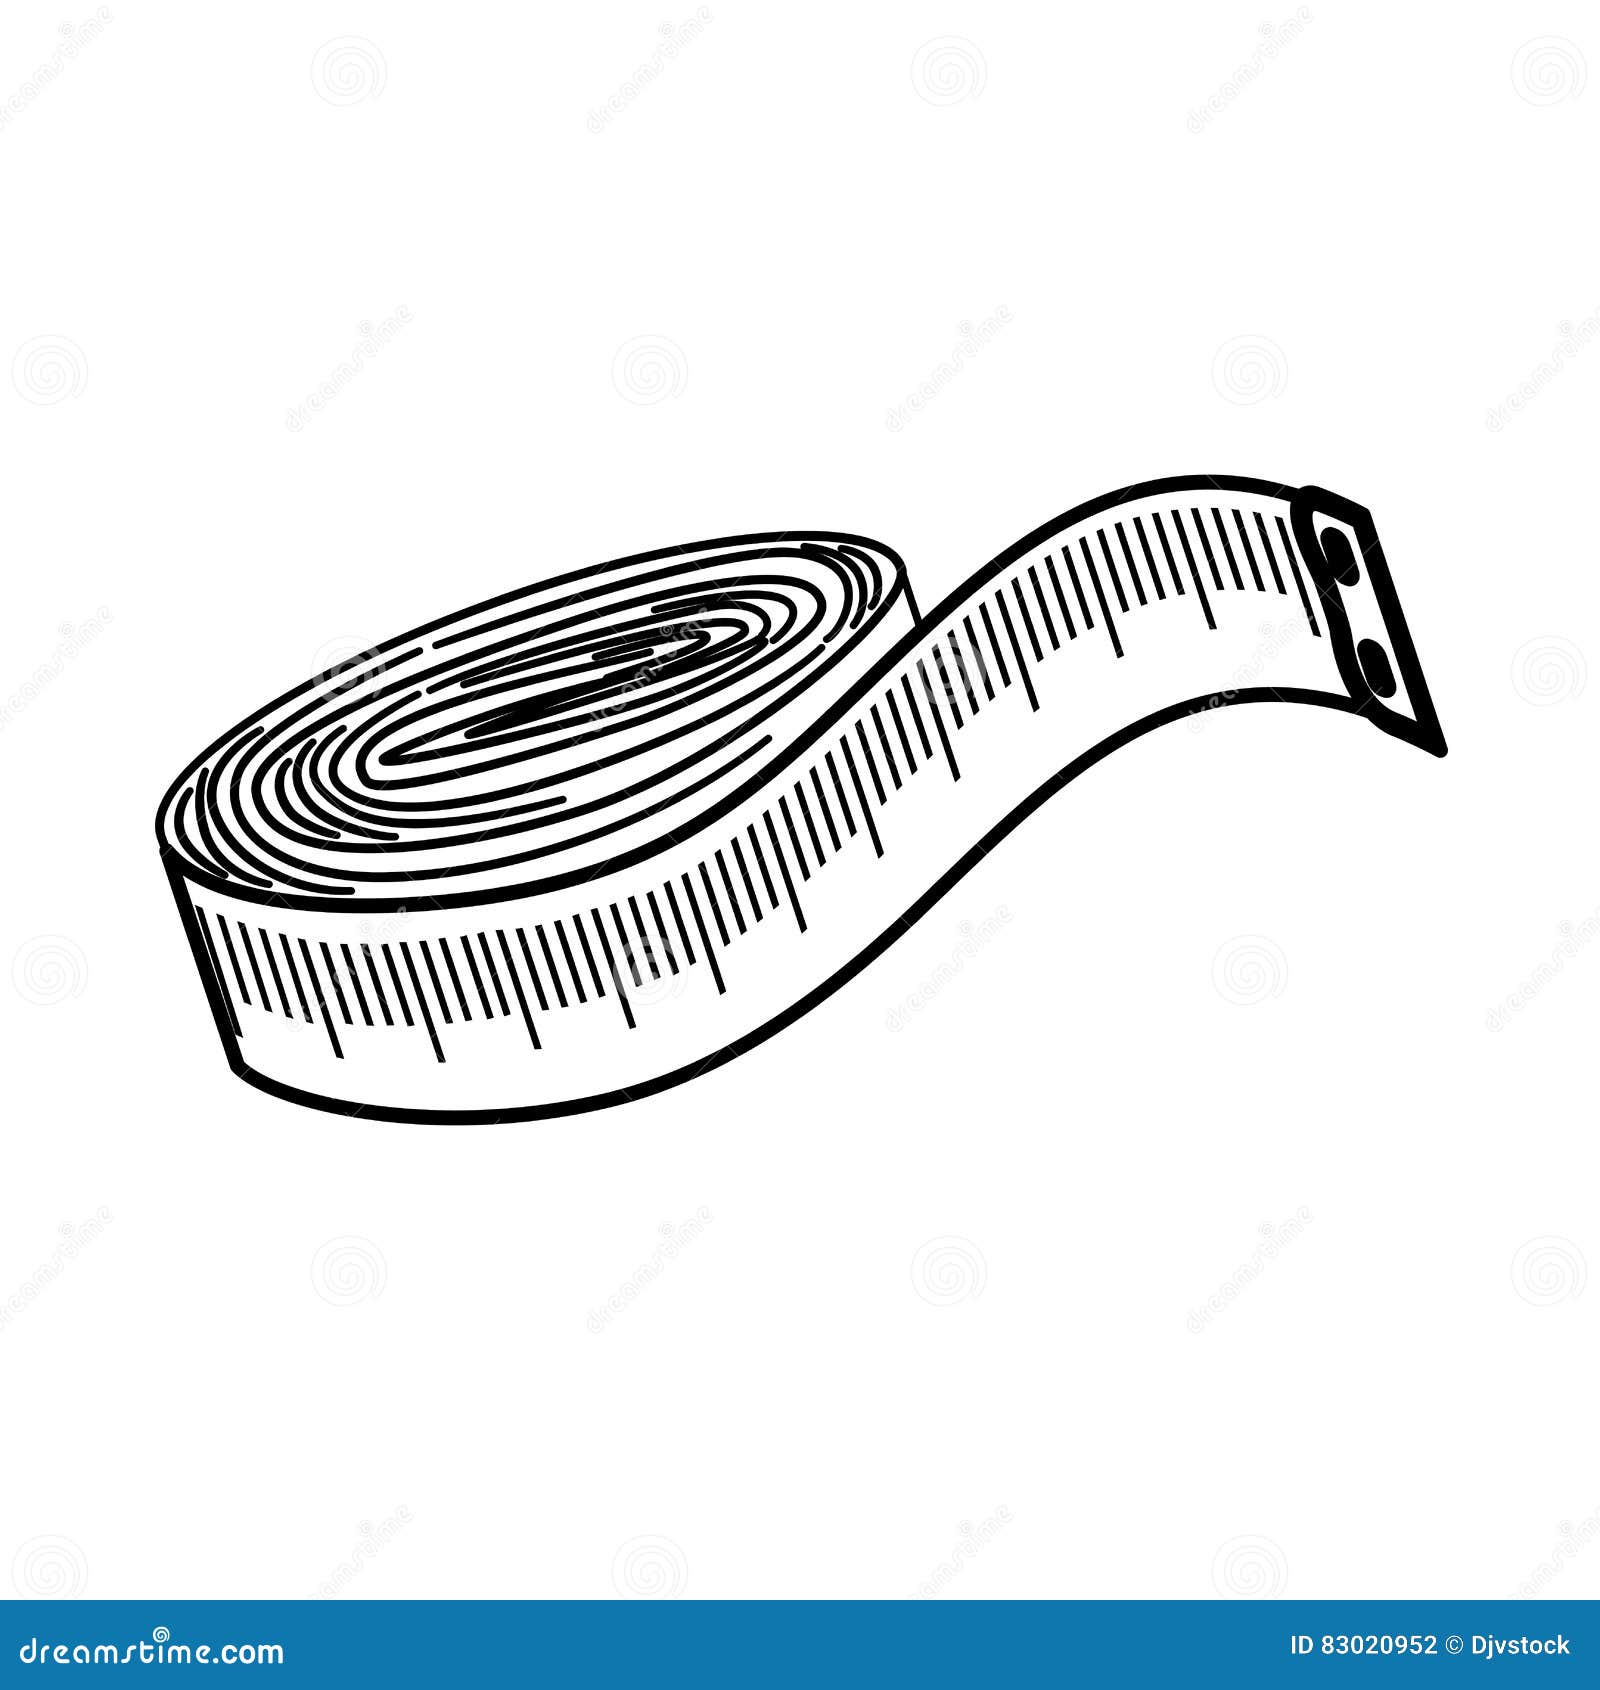 Sewing tape measure stock illustration. Illustration of closeup